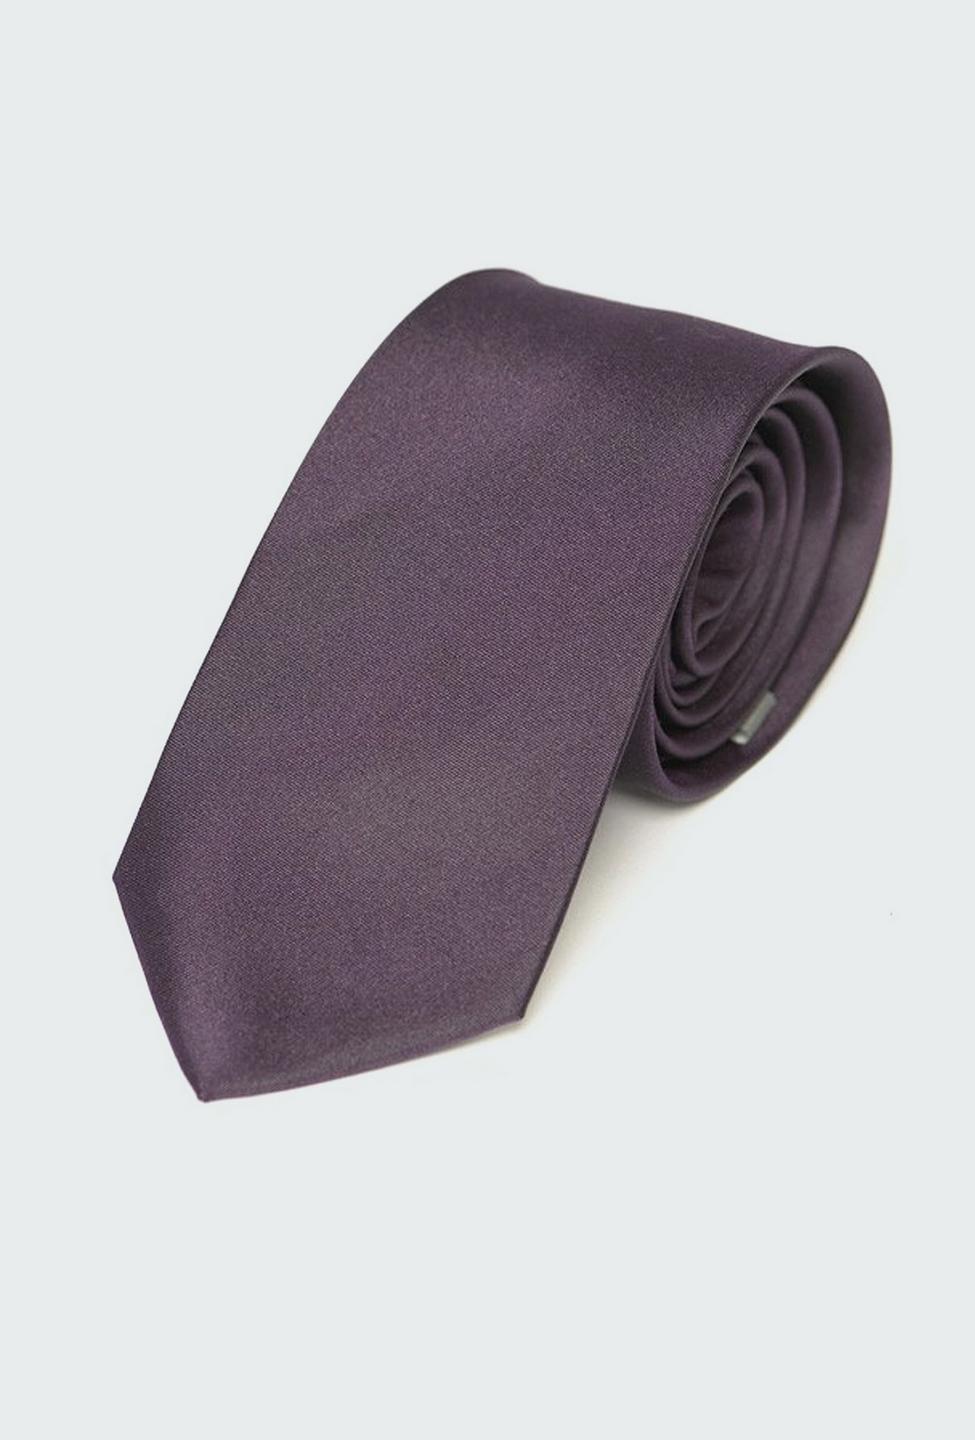 Purple tie - Solid Design from Premium Indochino Collection